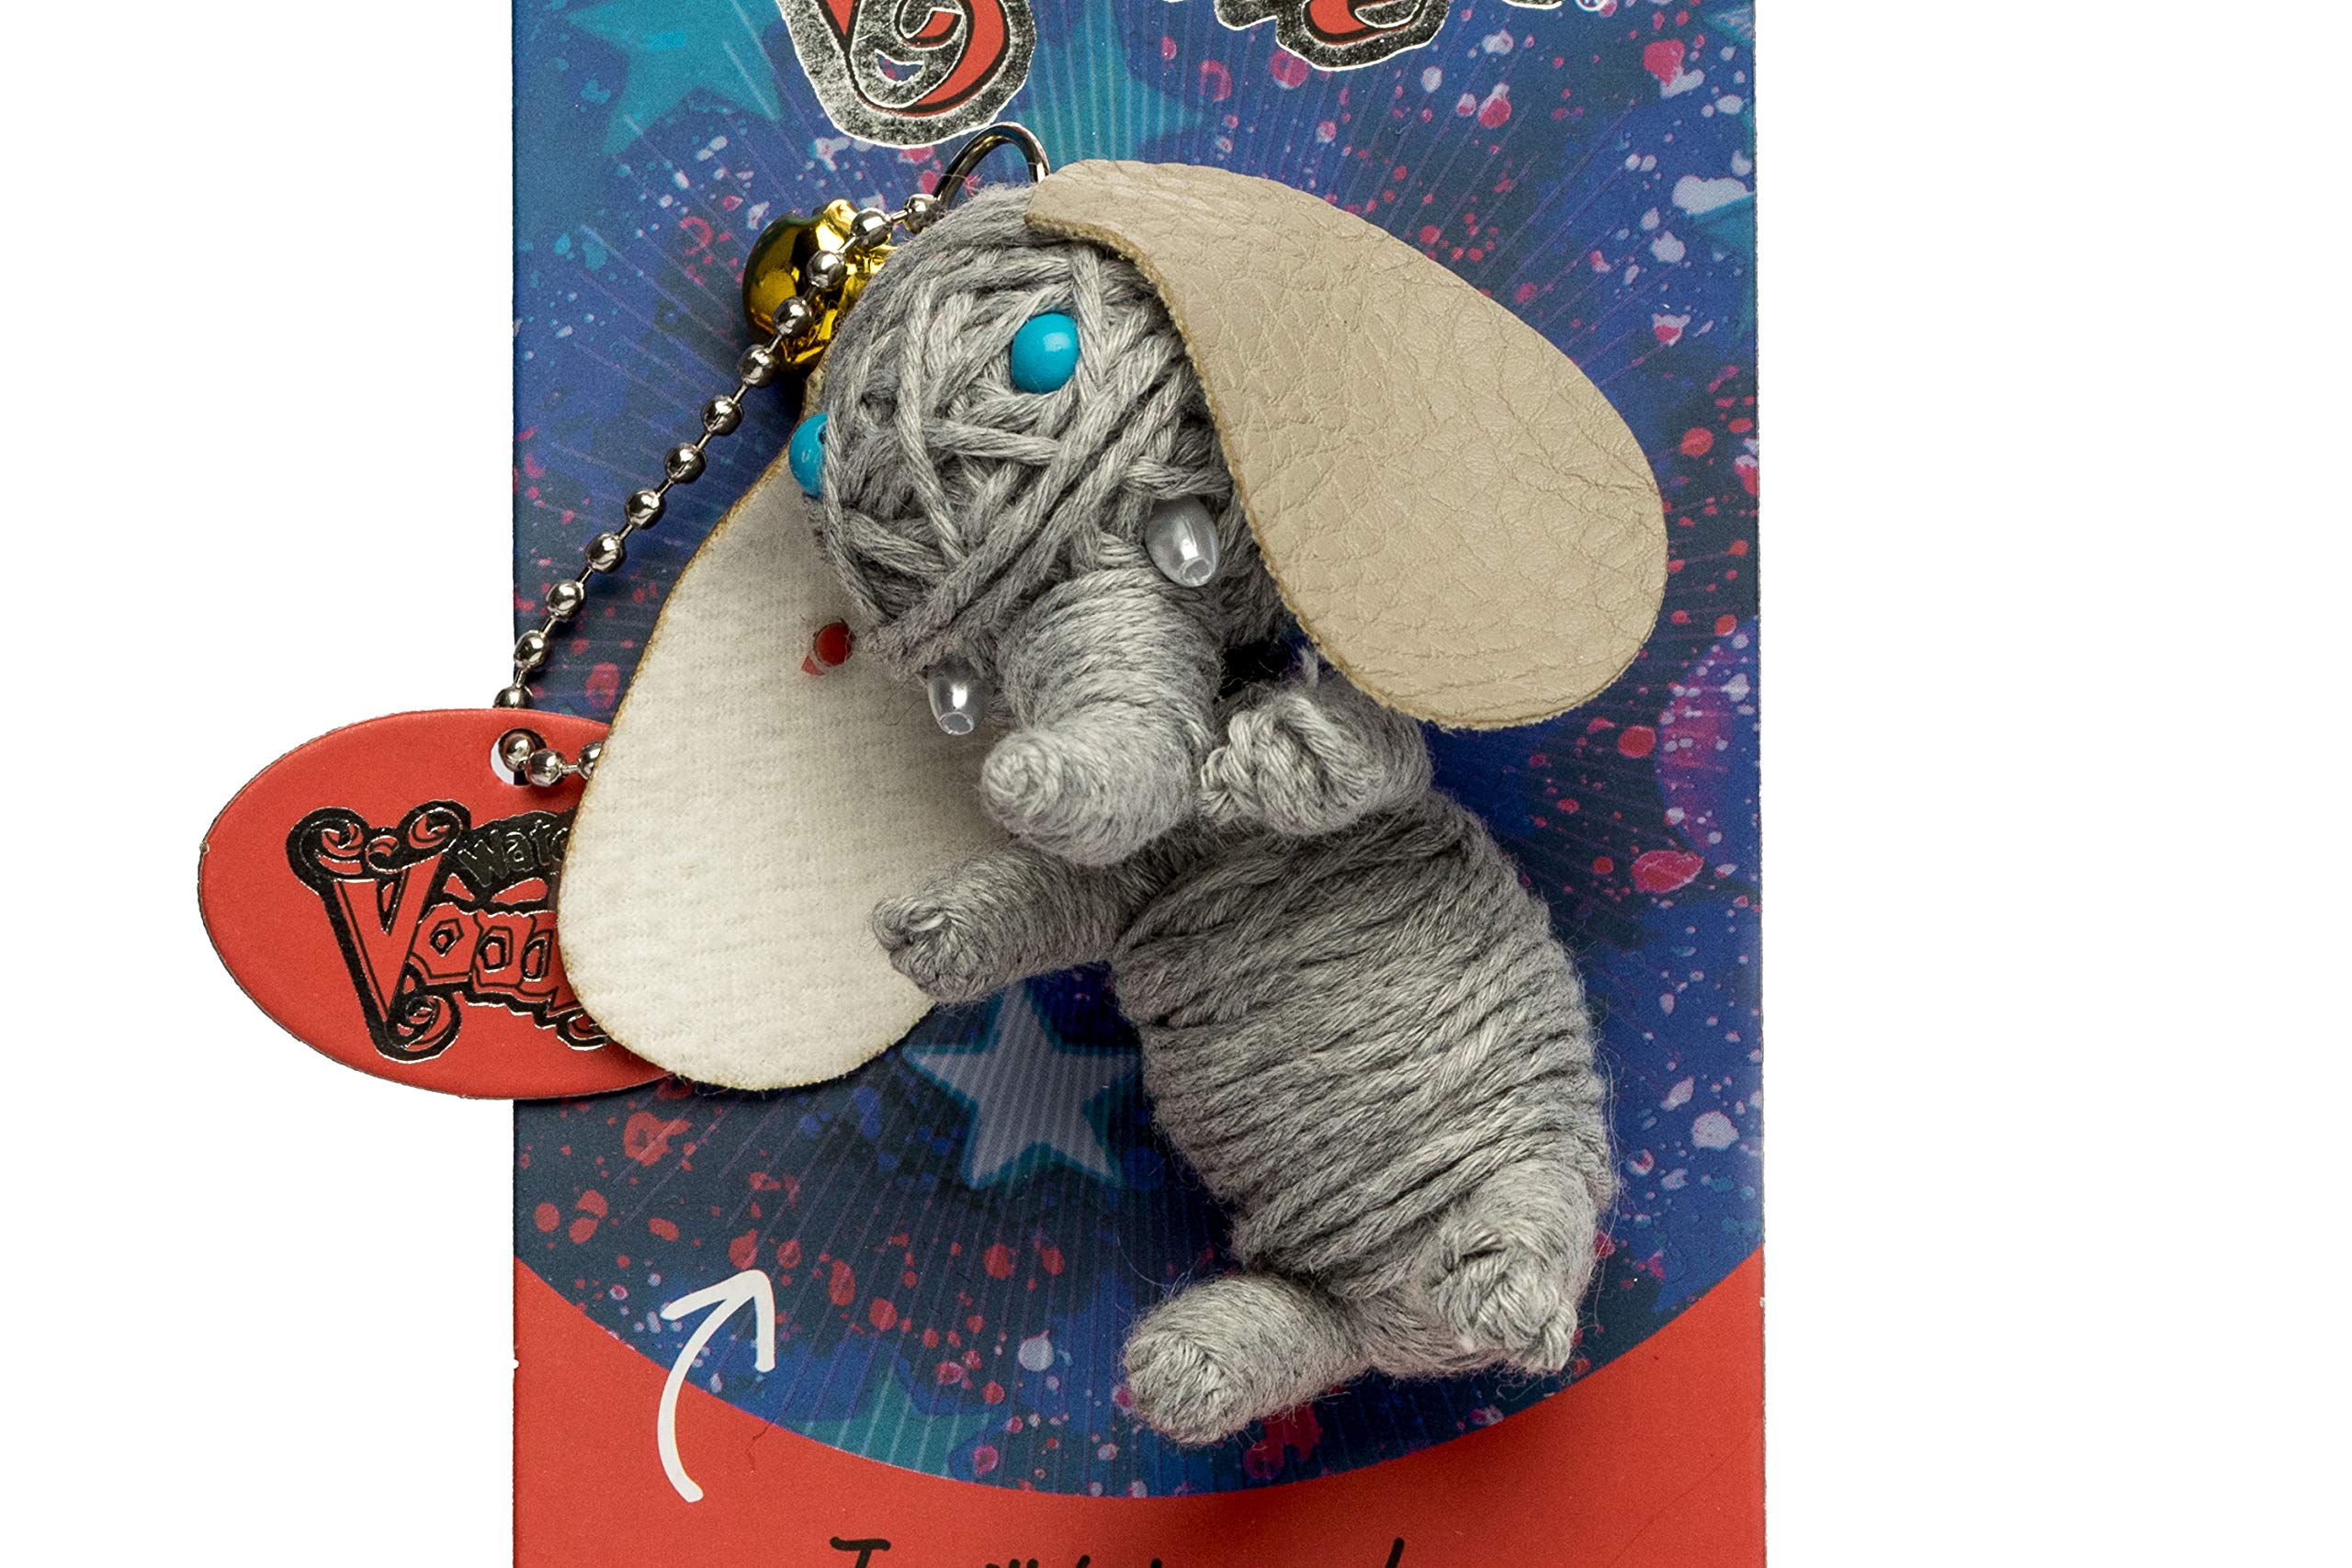 Watchover Voodoo - String Voodoo Doll Keychain – Novelty Voodoo Doll for Bag, Luggage or Car Mirror - Jumbo Memory Voodoo Keychain, 5 inches